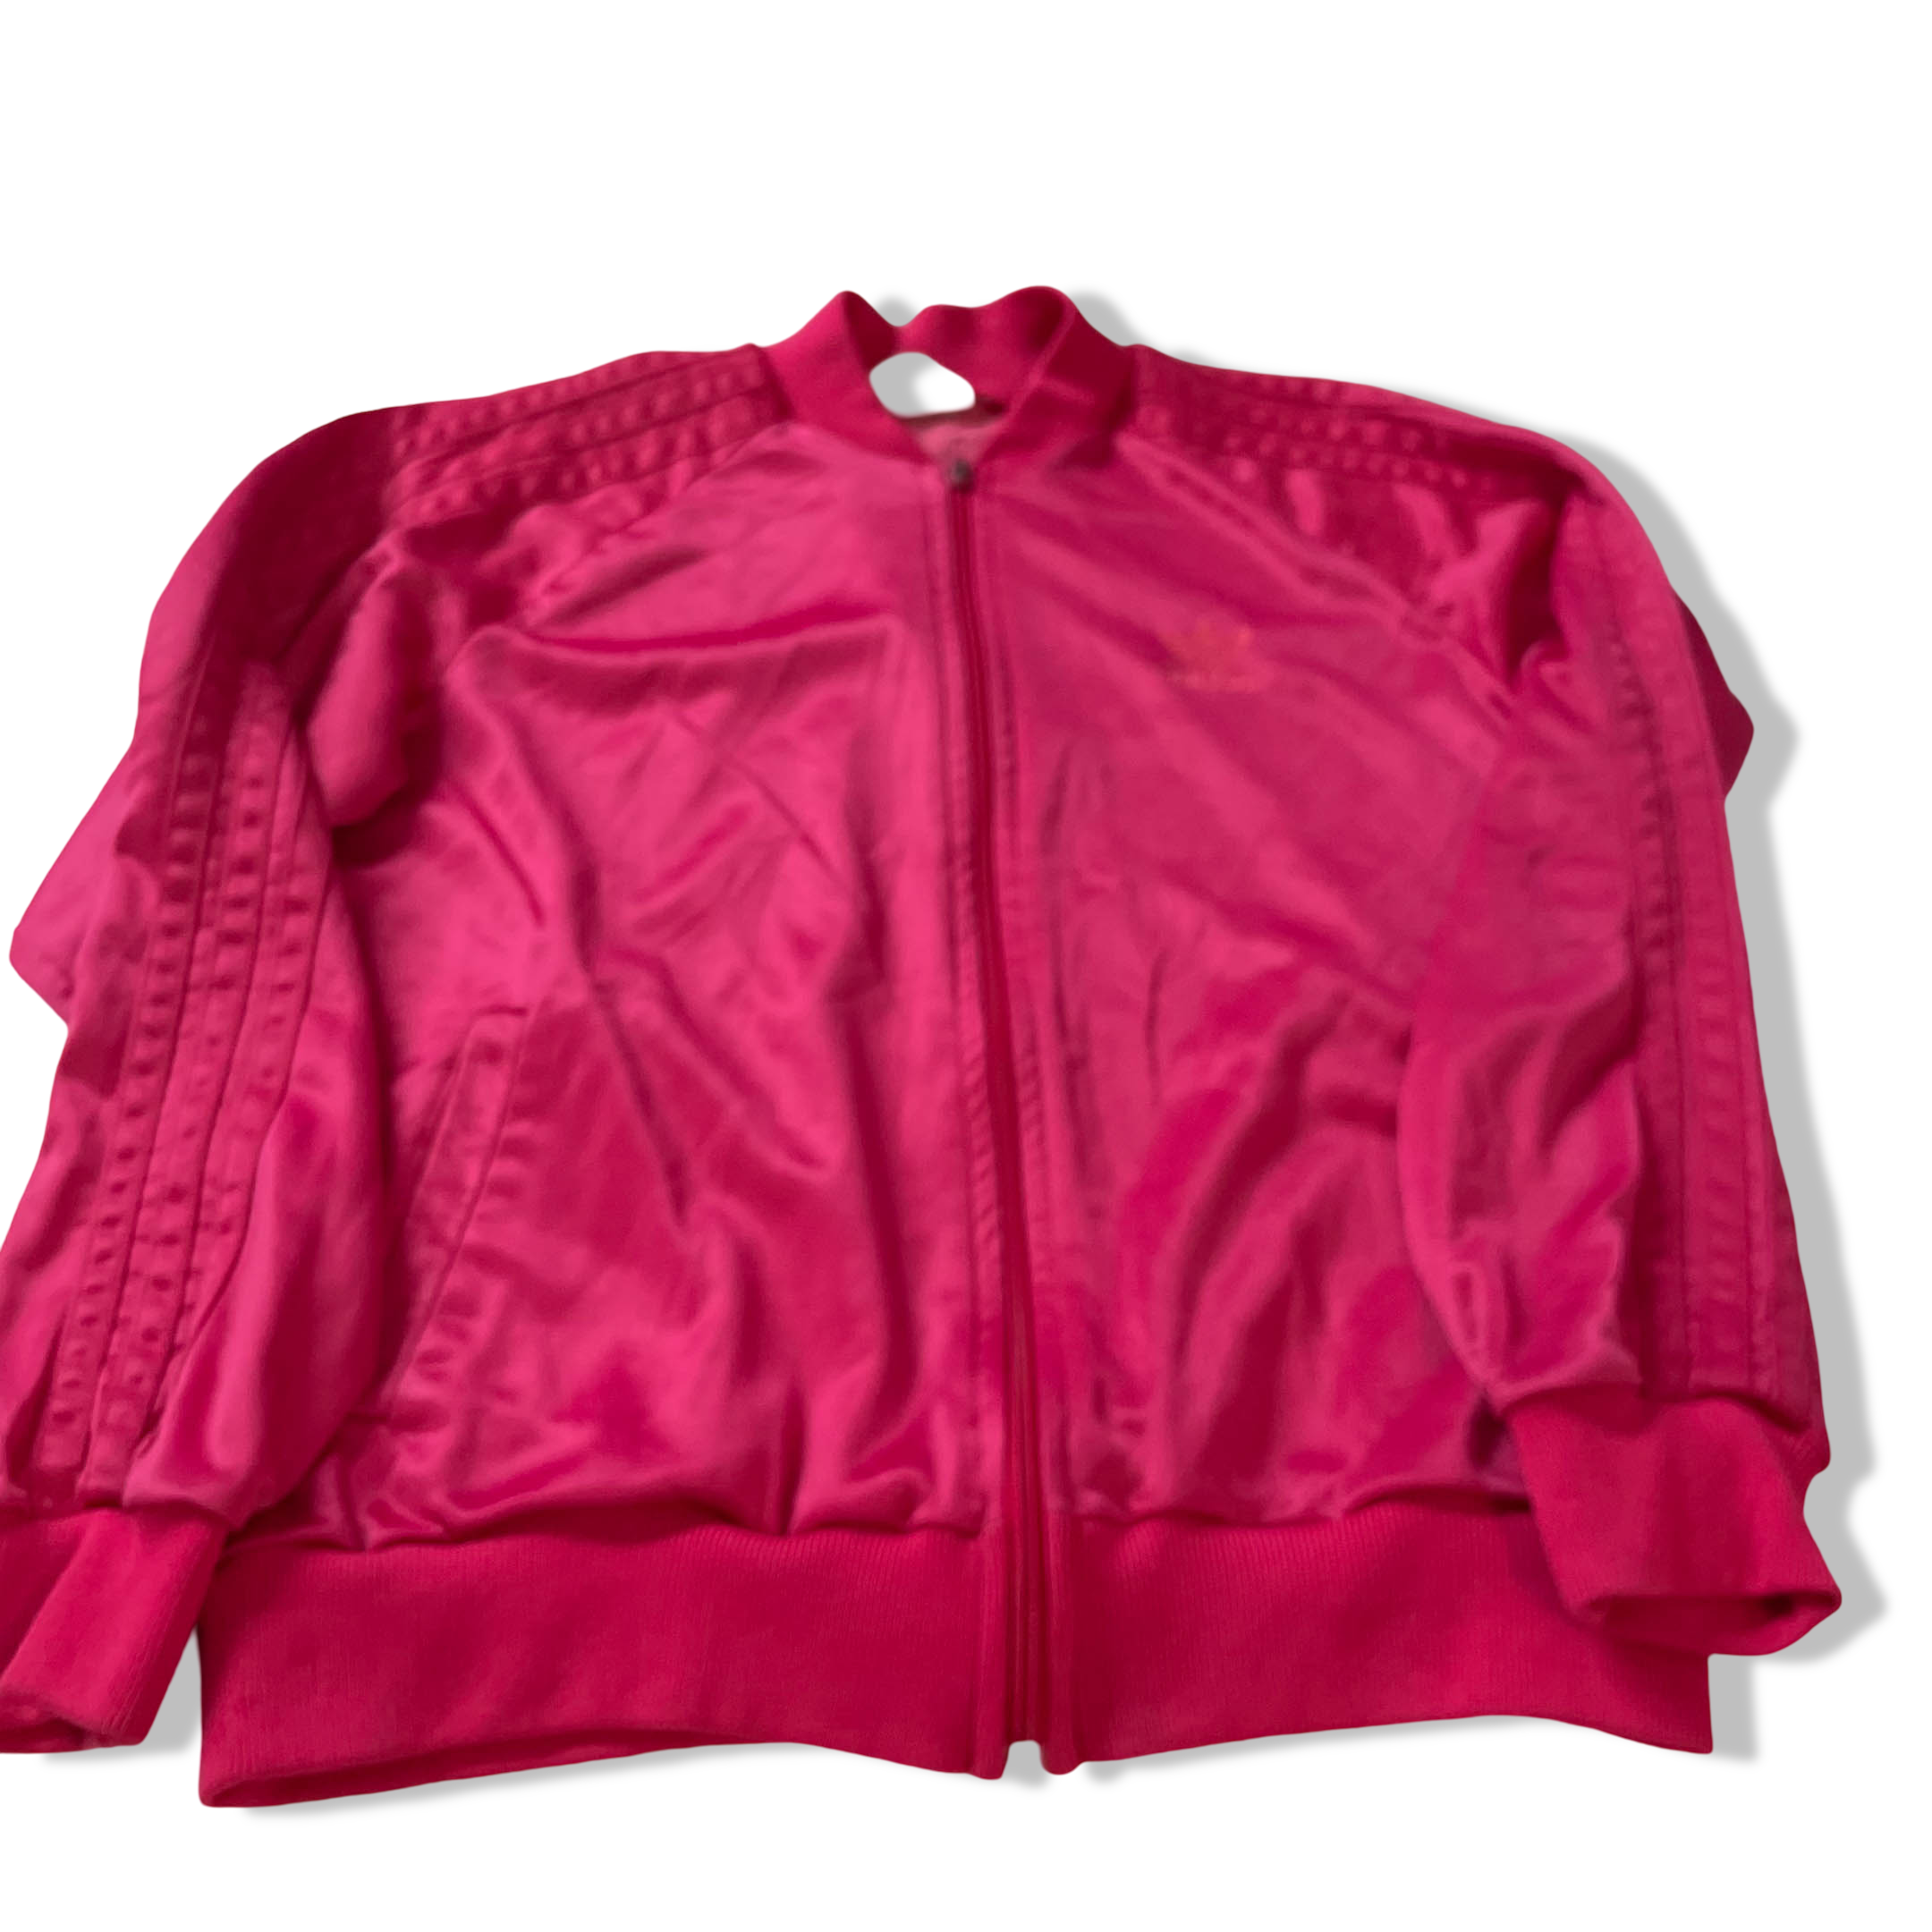 Vintage Adidas women's made in USA full zip pink jacket|L25 W20|SKU 3840